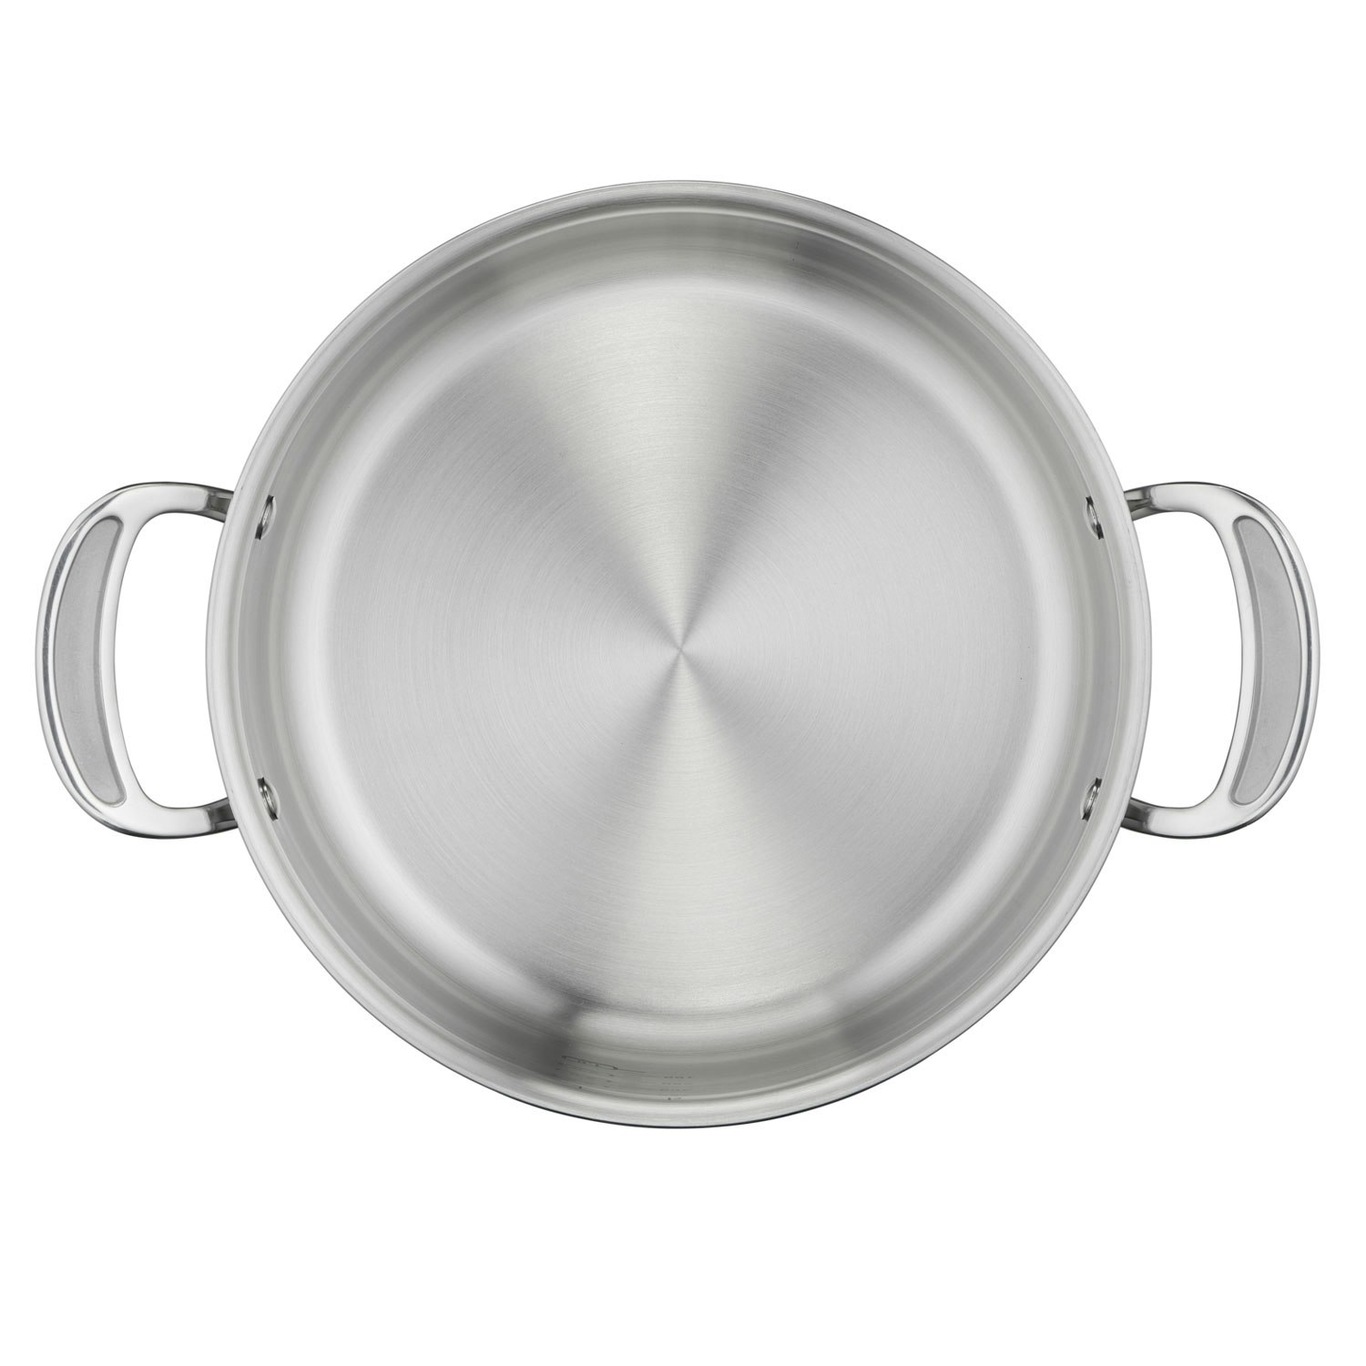 Original-Profi Collection® Stainless Steel Cookware Set, 4 Piece